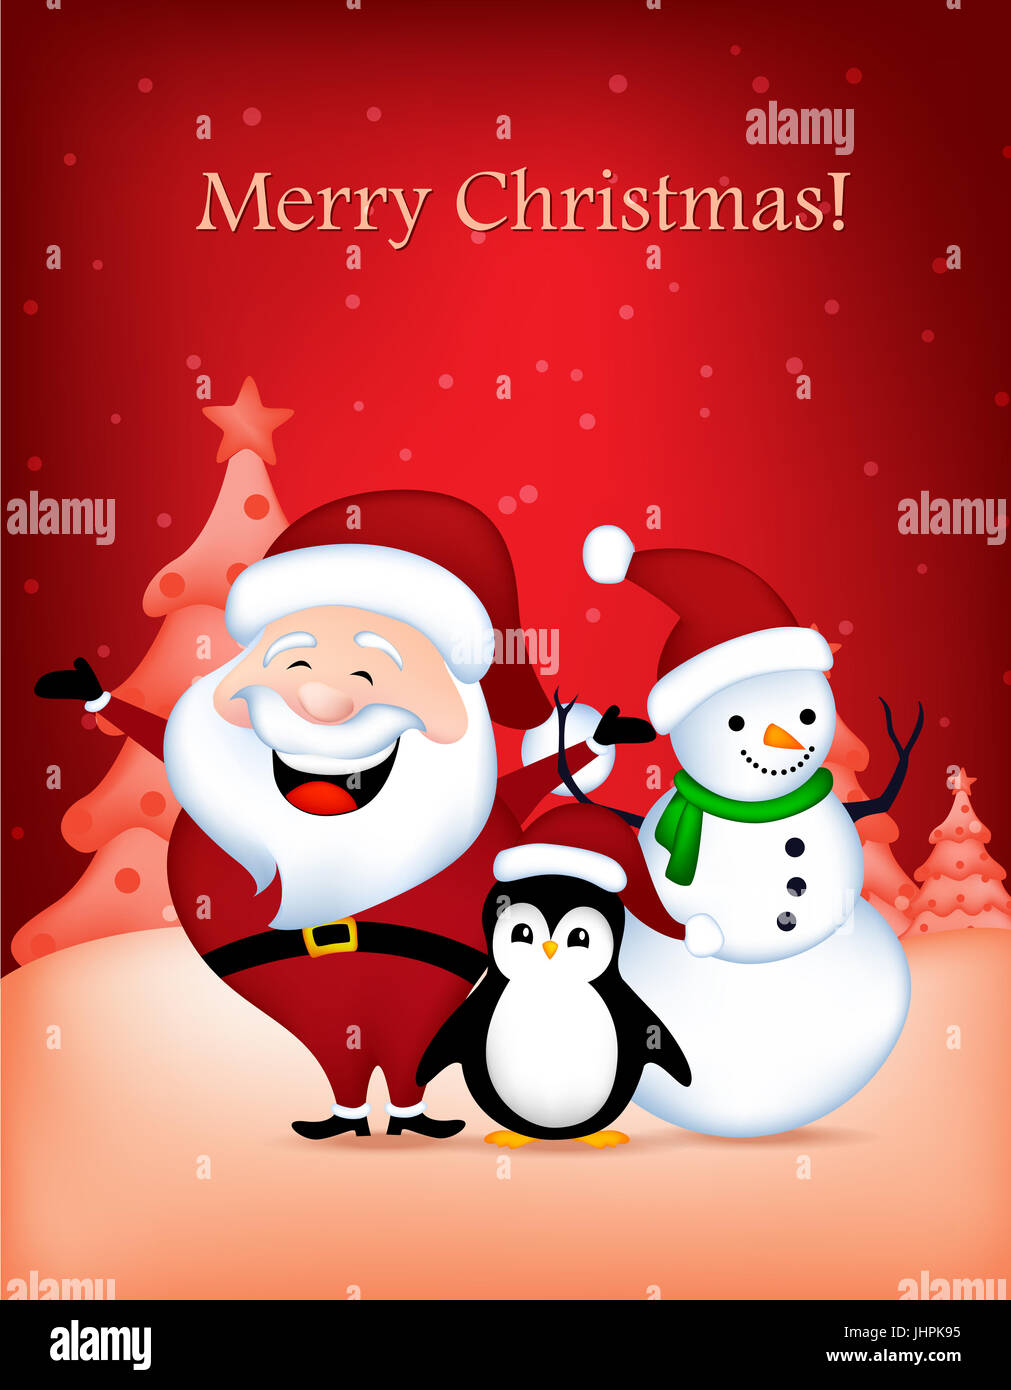 cute santa claus snowman and penguin wishing a merry christmas ...